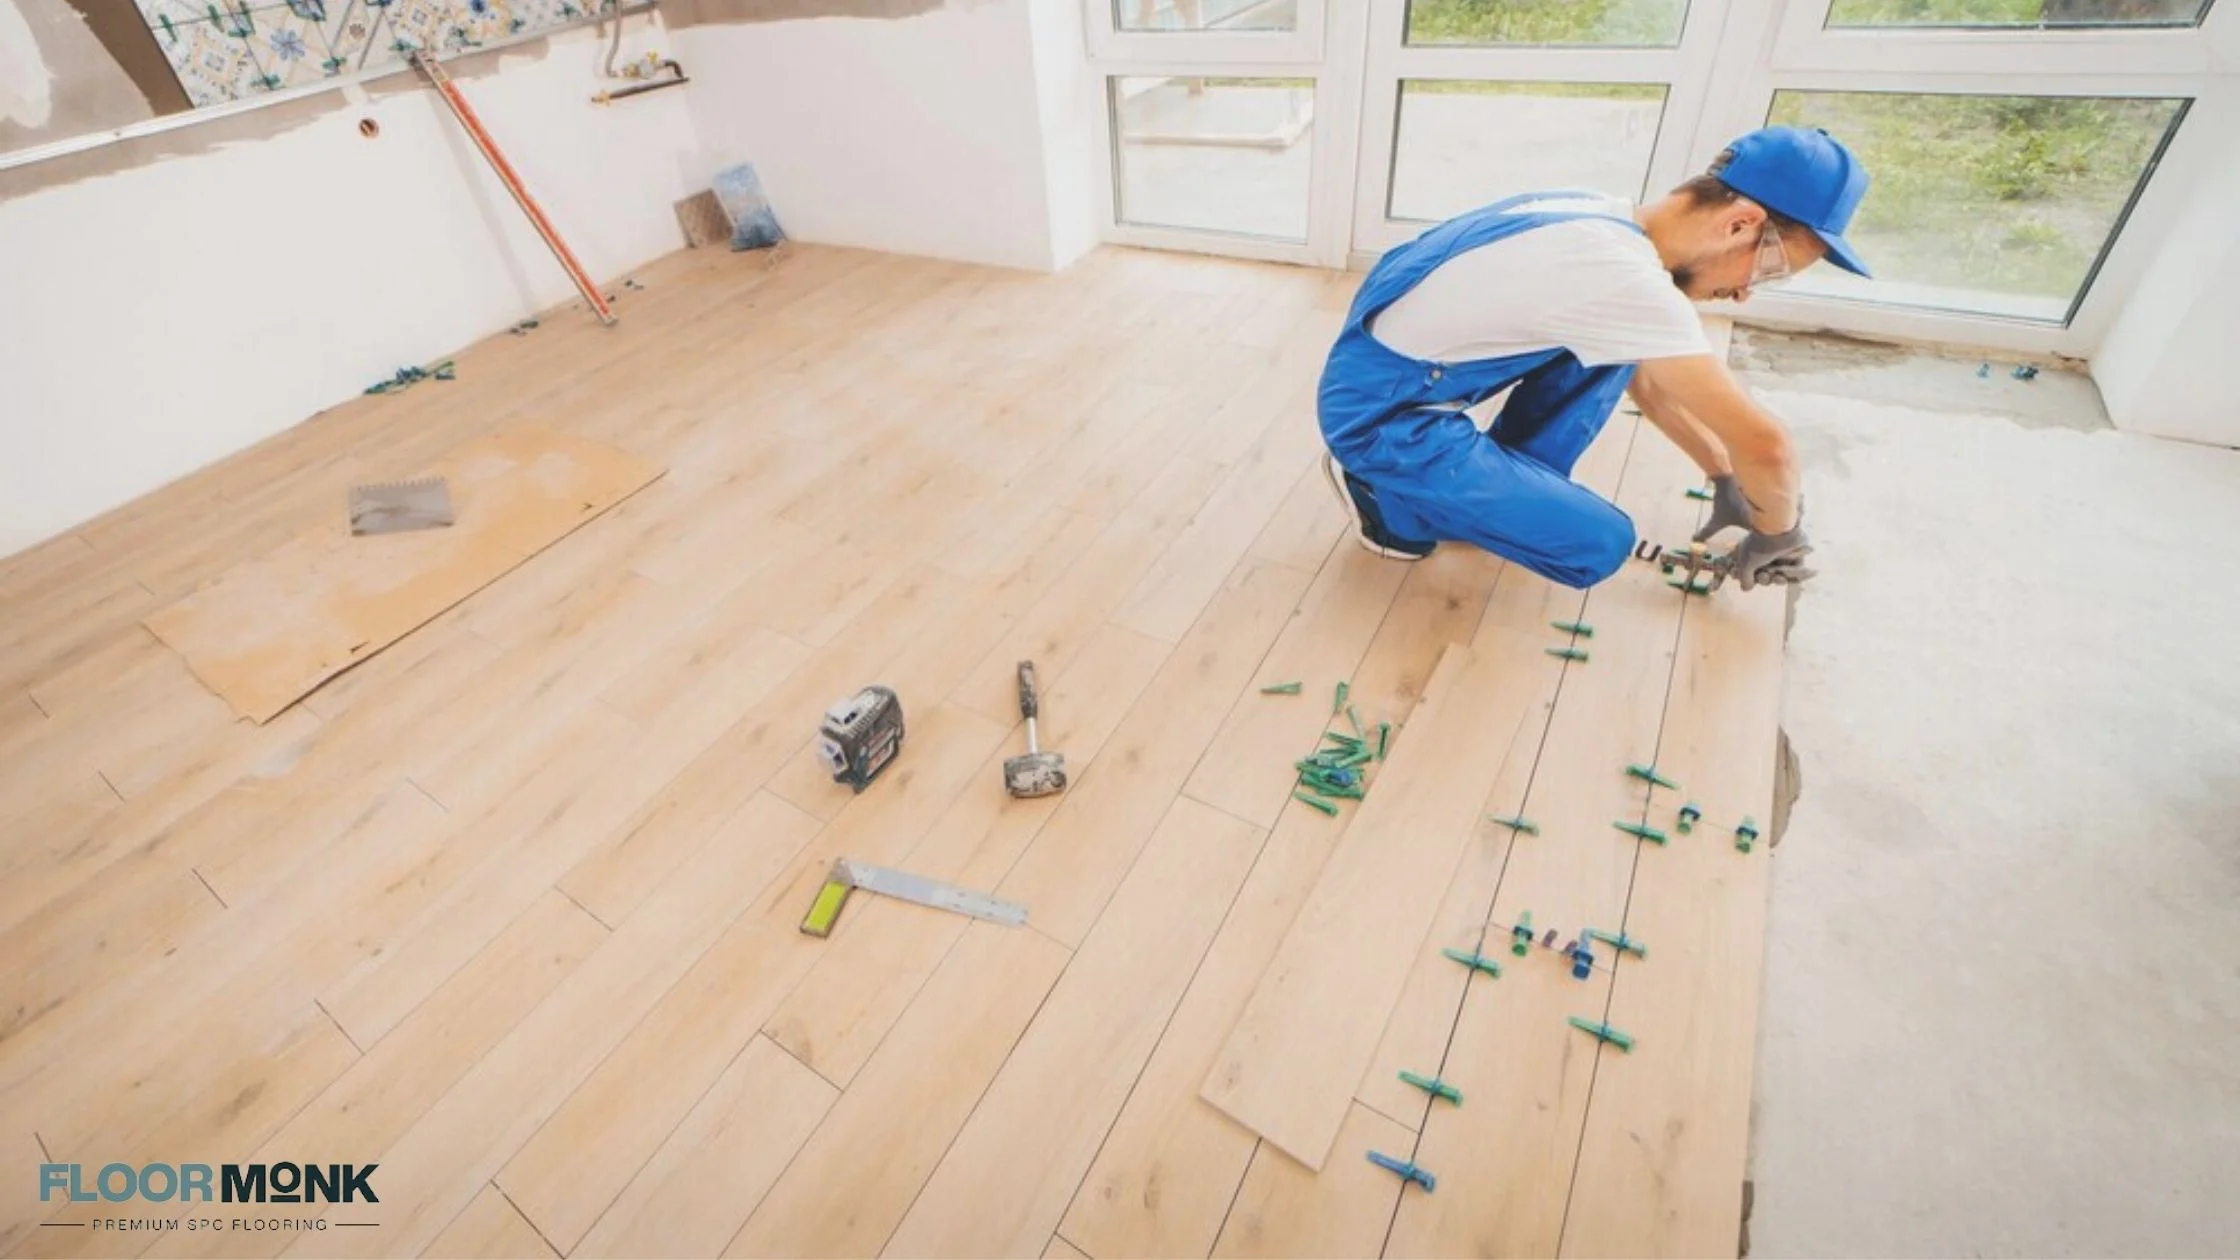 Vinyl flooring advantages for DIY flooring projects